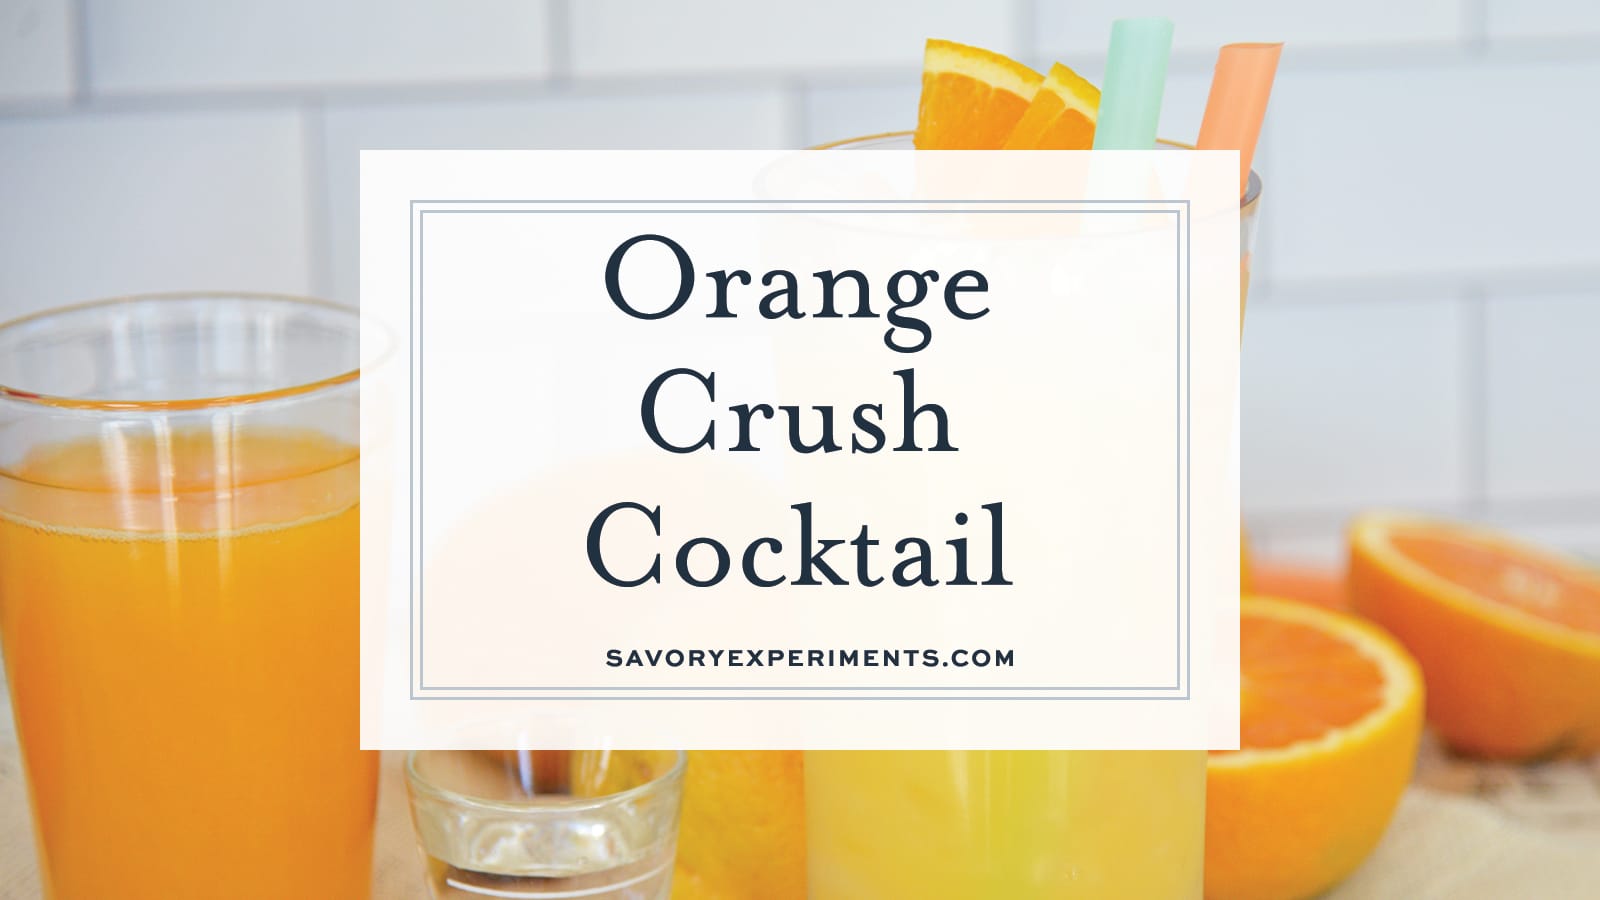 Slow Screw.  Liquor drink recipes, Orange juice shake, Mixologist